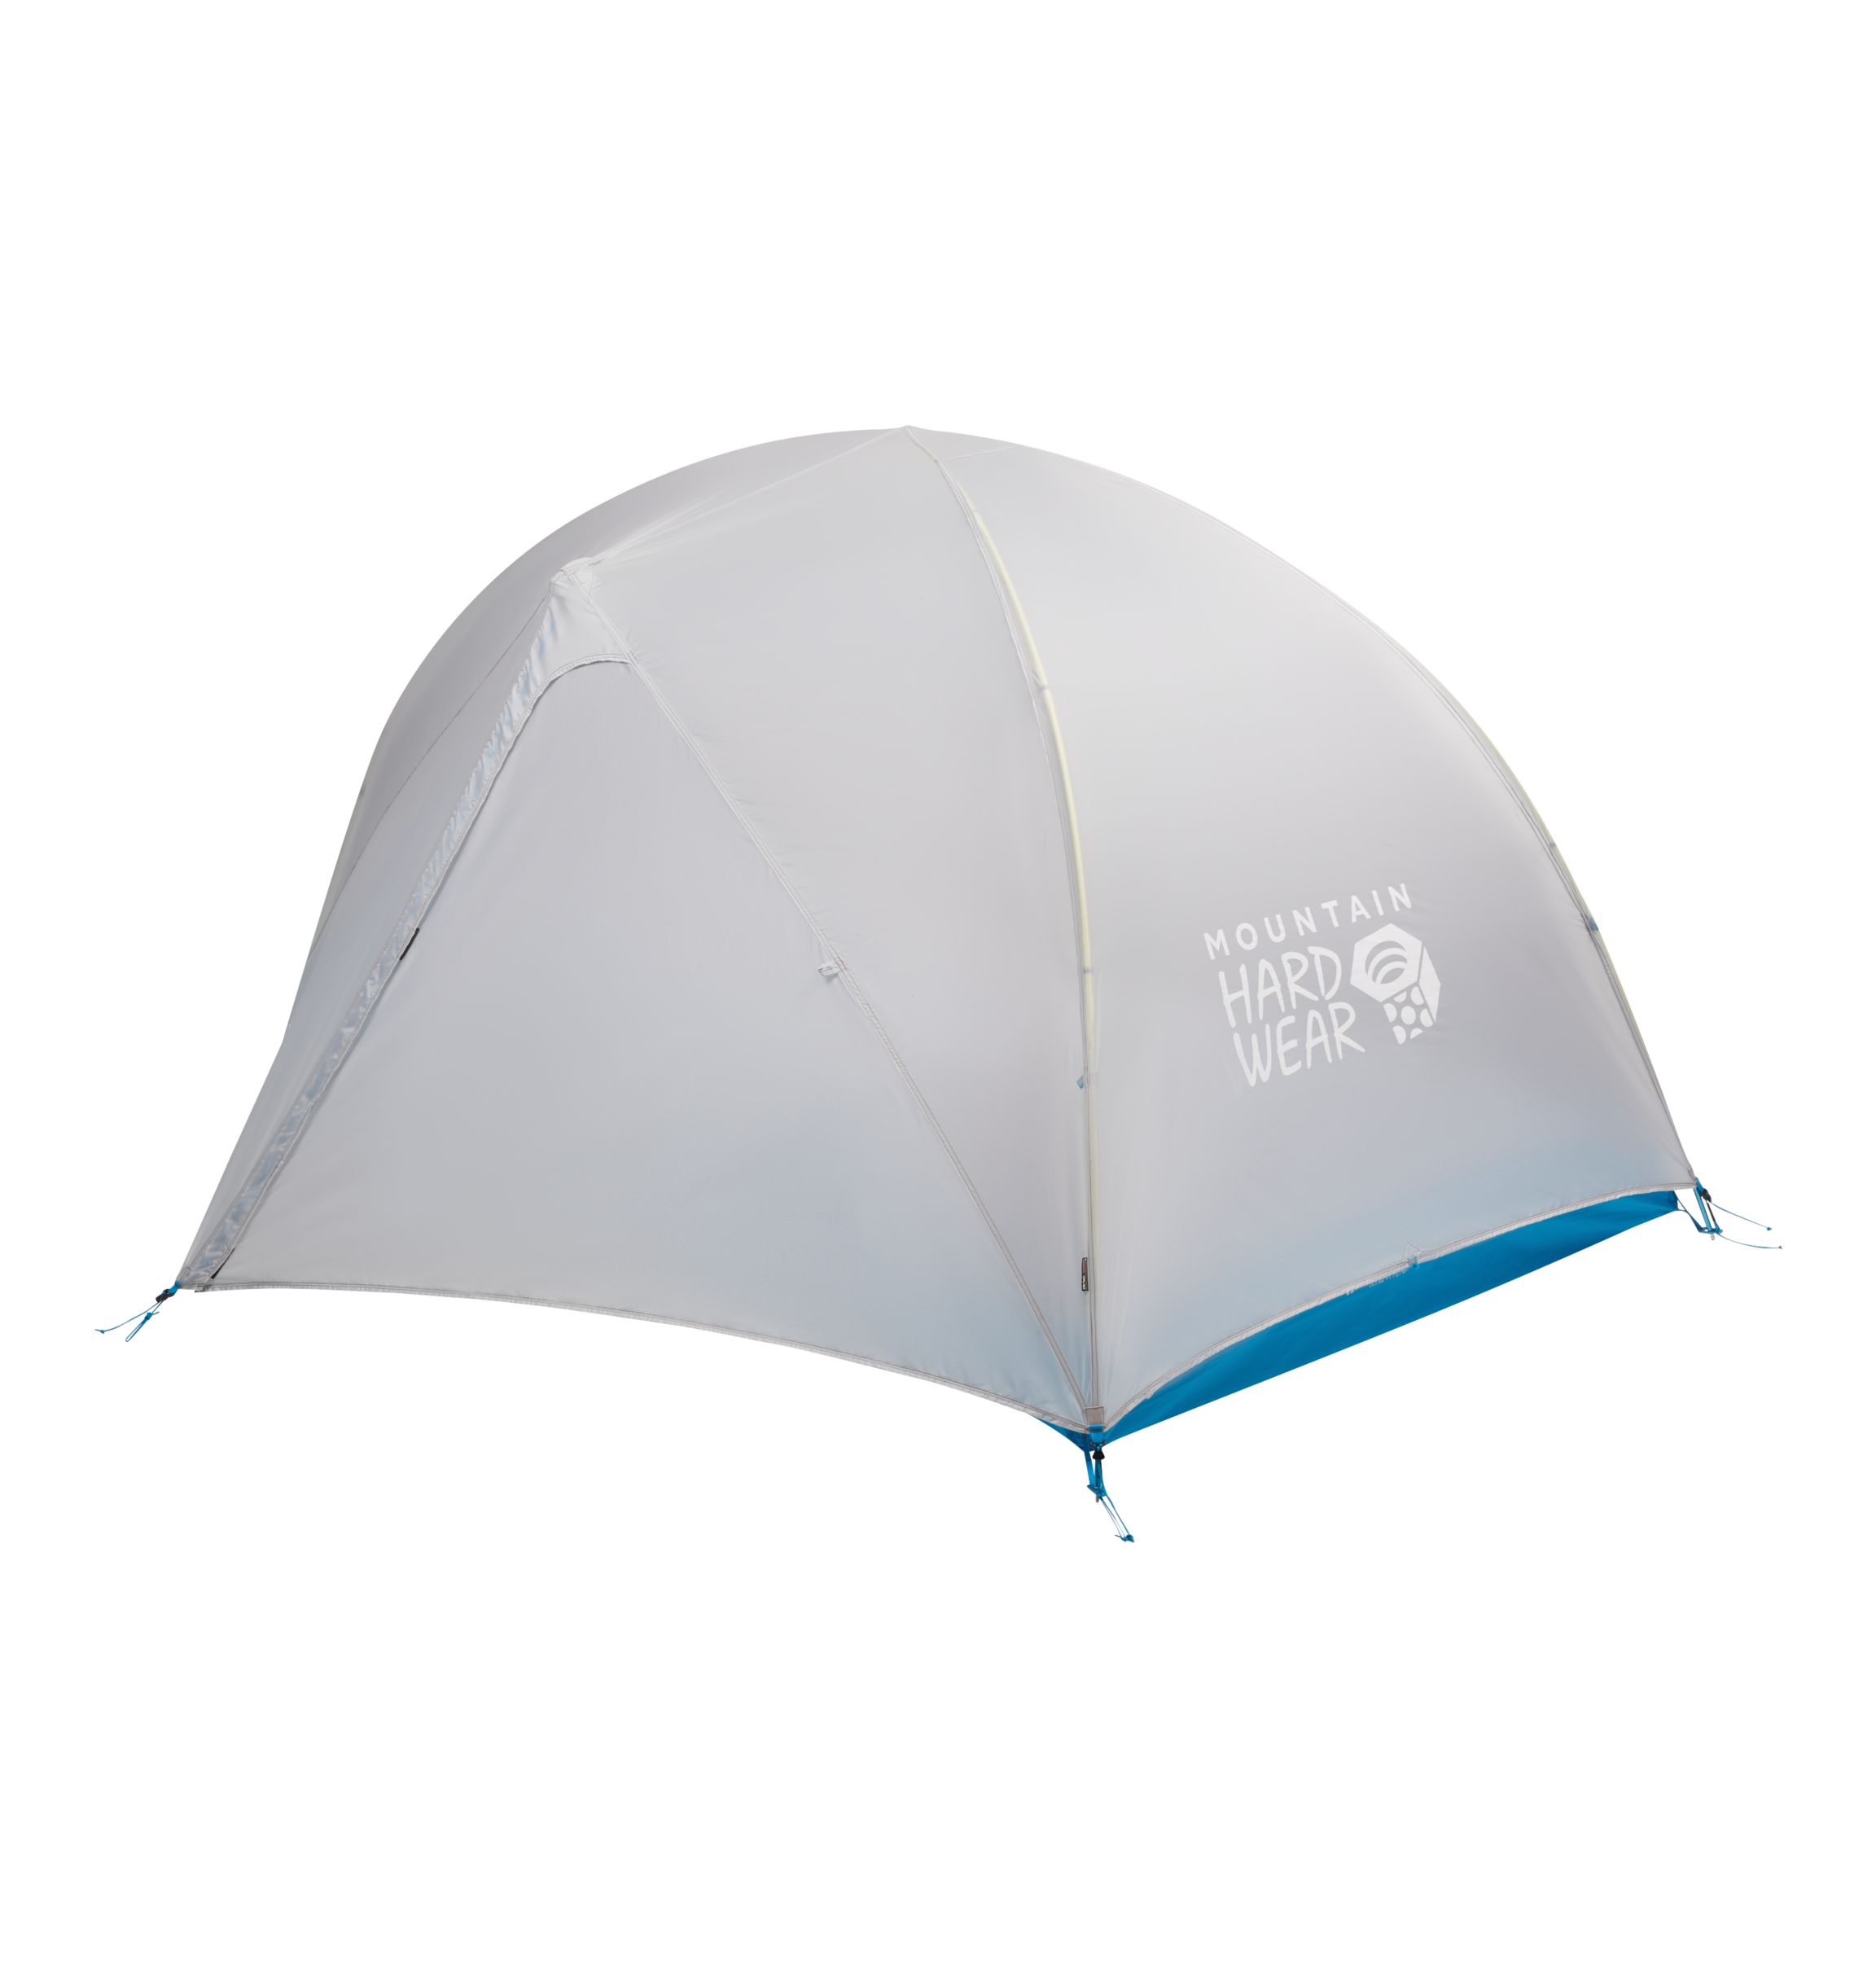 Aspect™ 2 Tent